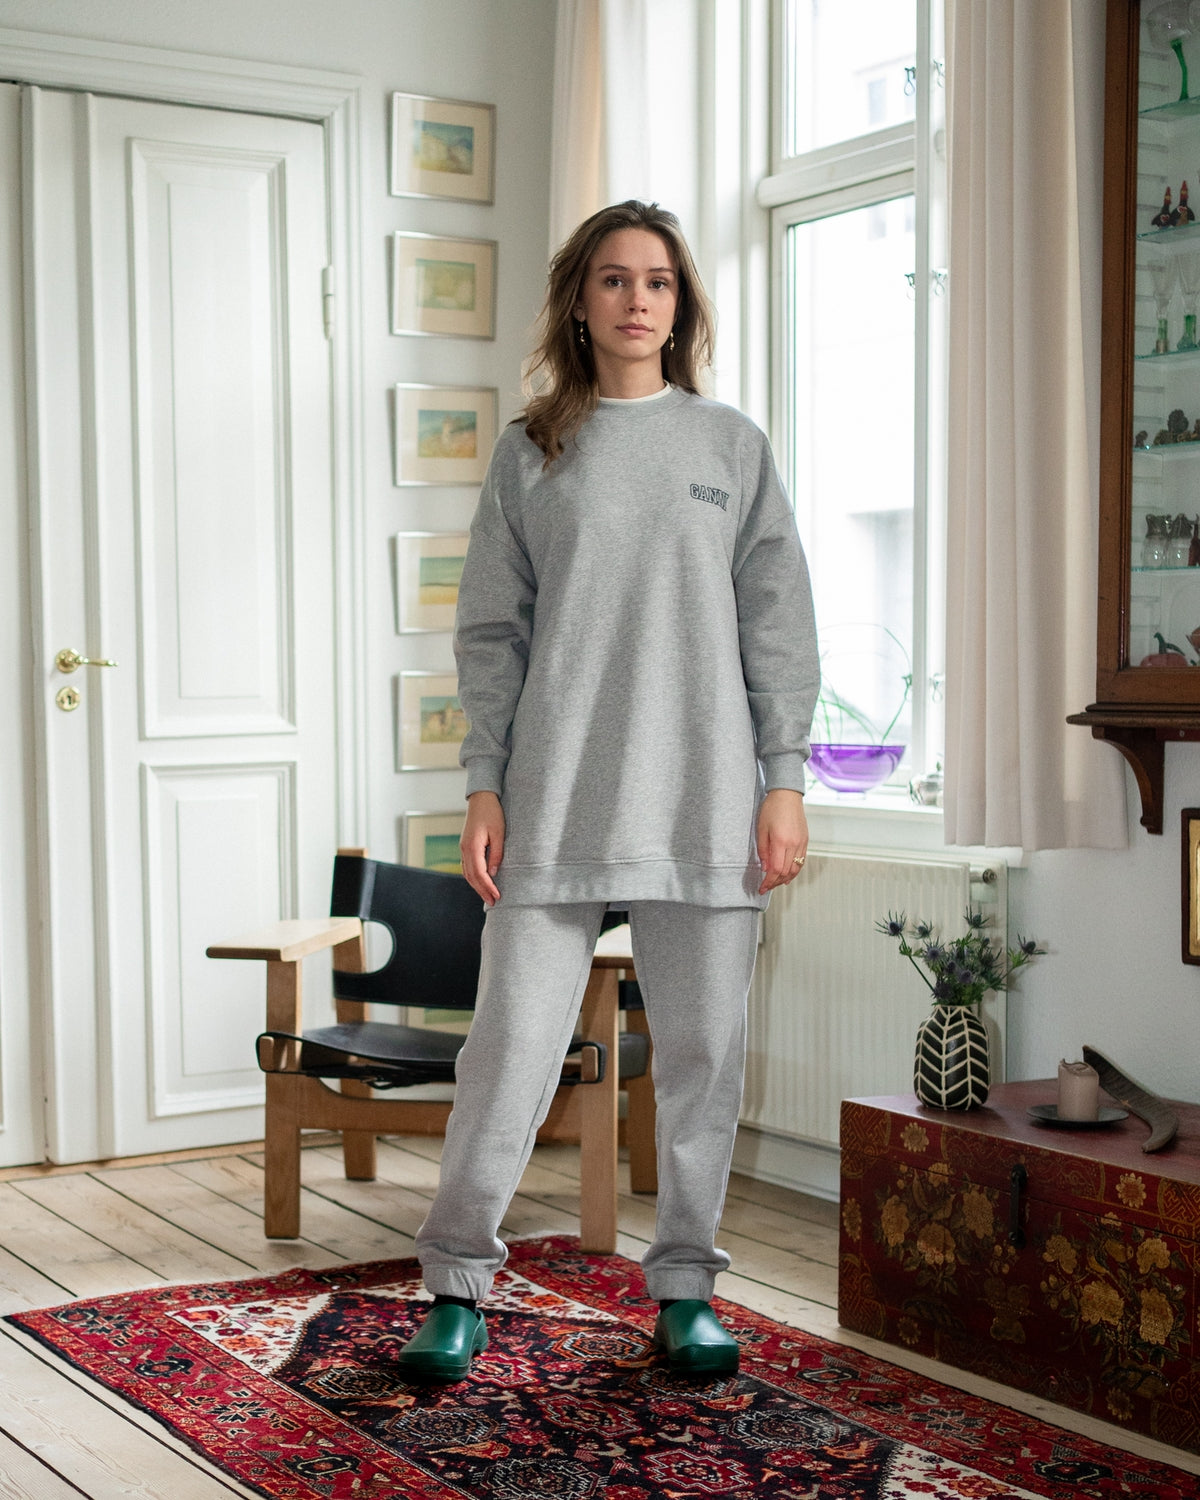 Oversized Sweatshirt - Paloma Melange - Ganni - Munkstore.dk